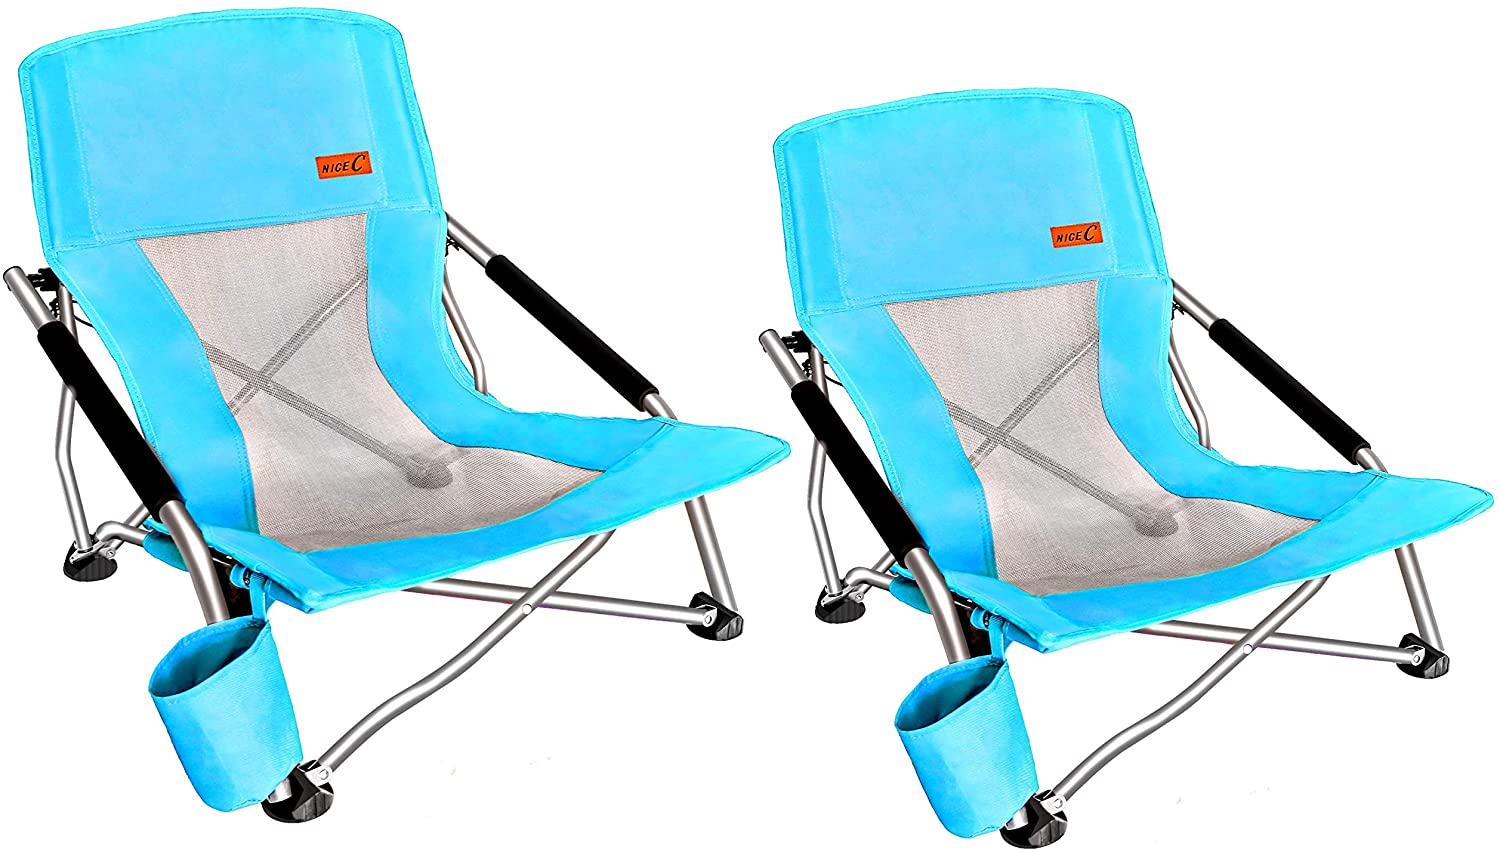 Nice C Low Foldable Beach Chair, 2-Piece